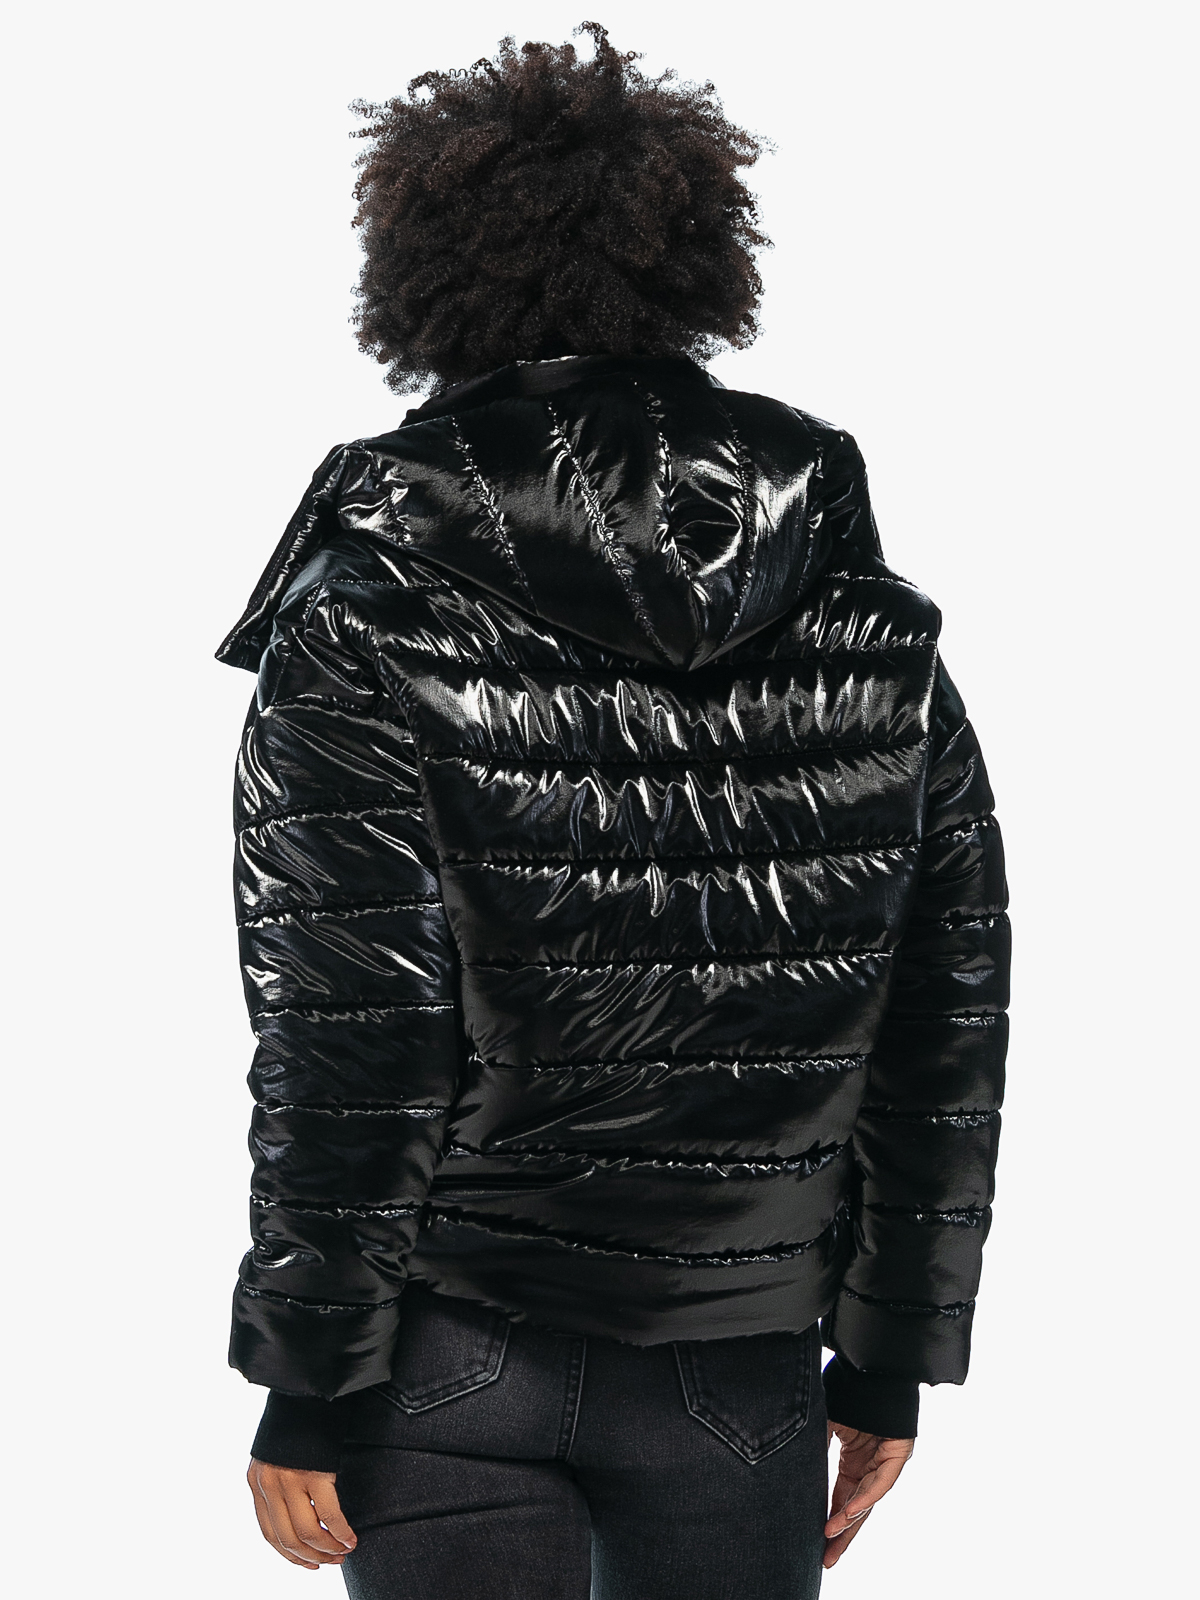 Куртка женская стеганая Michelle черная блестящая | Фото №4